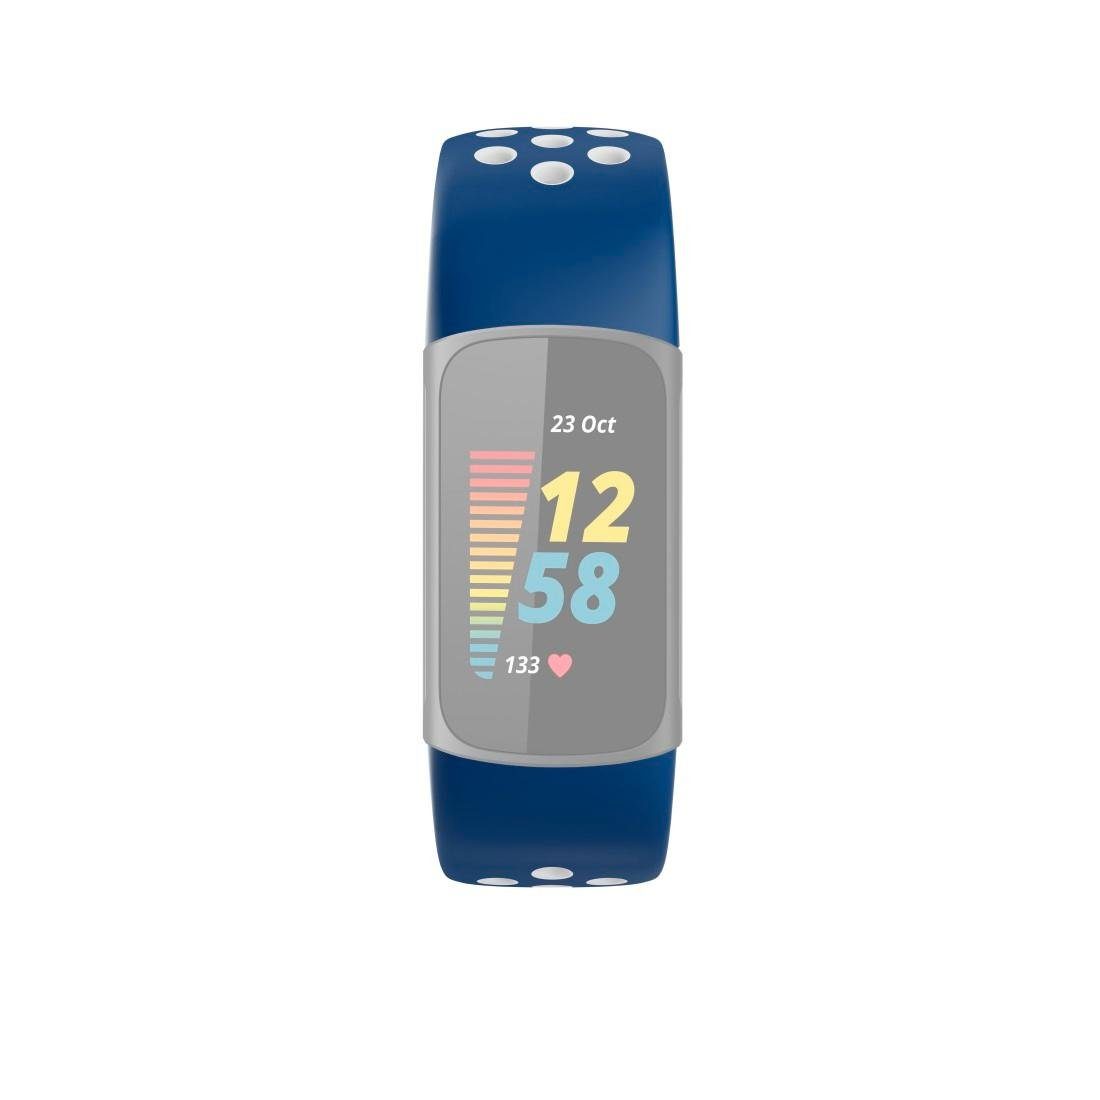 Sportarmband dunkelblau für Smartwatch-Armband Hama 5, Charge Uhrenarmband atmungsaktives Fitbit